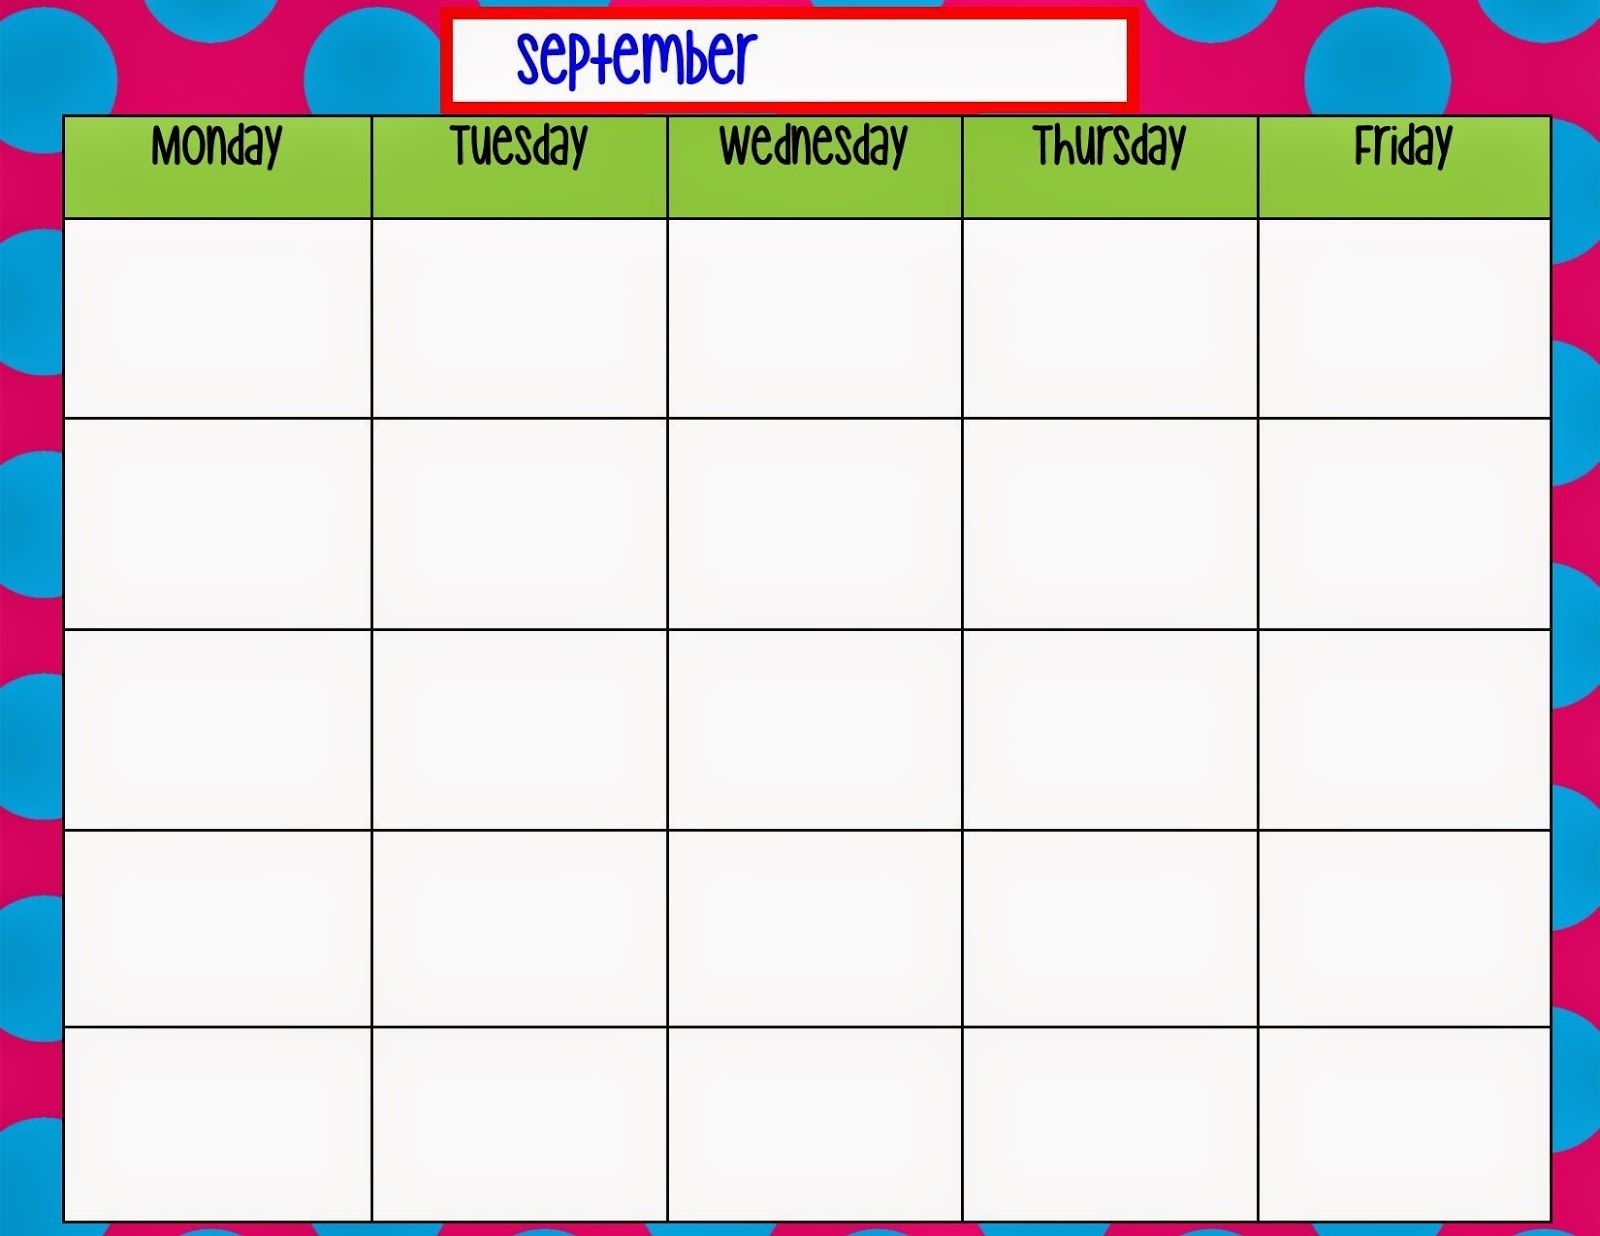 Monday Through Friday Calendar Template | Preschool | Pinterest  Monday Through Friday Blank Calendar Template